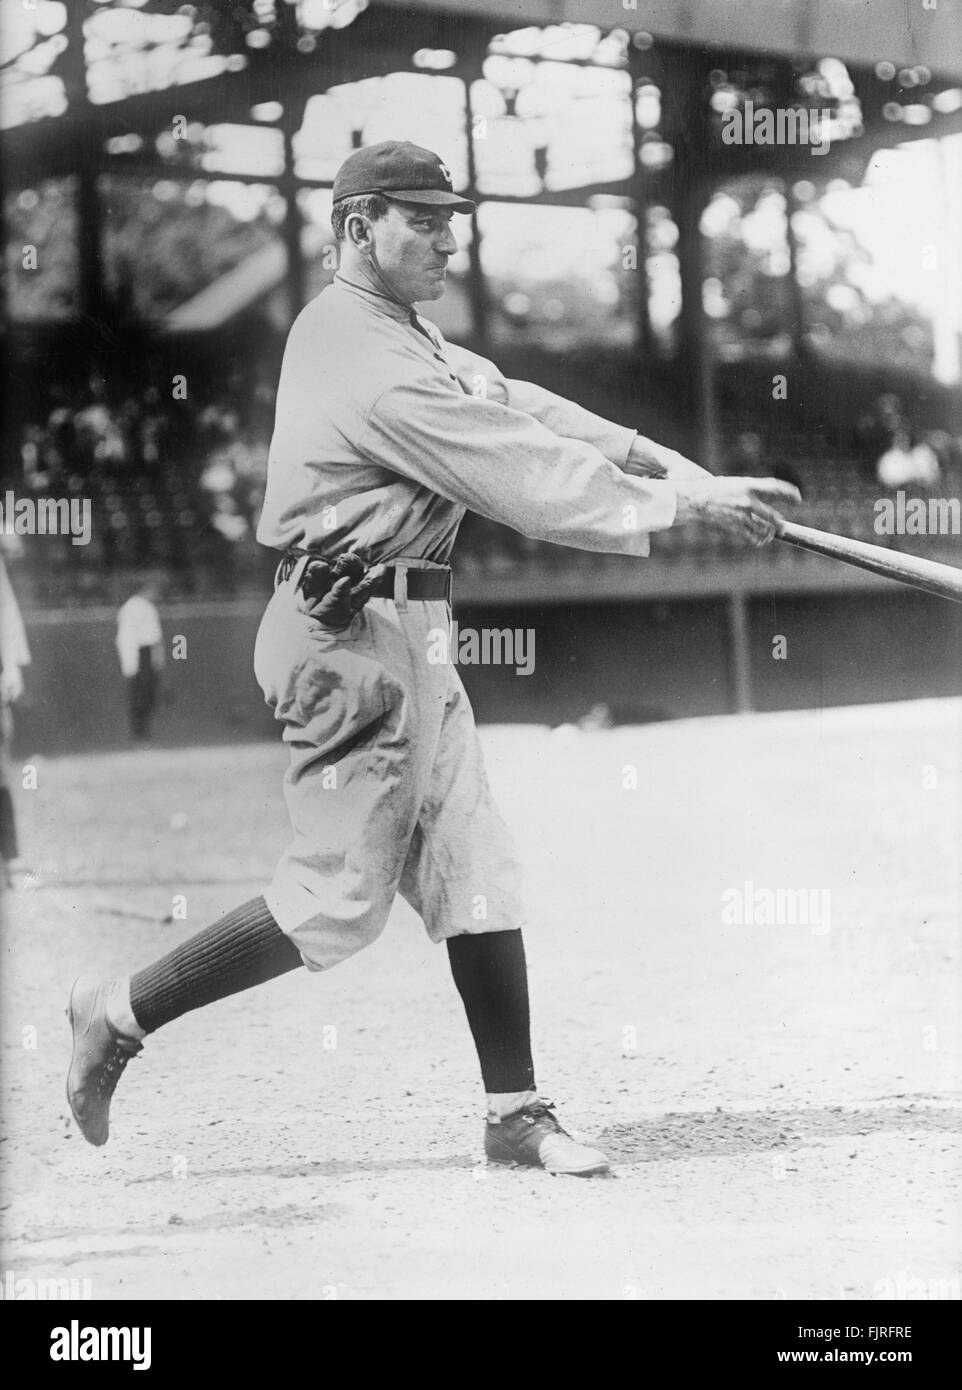 Nap Lajoie, Major League Baseball Player, Portrait, Cleveland Naps, circa 1914 Stock Photo